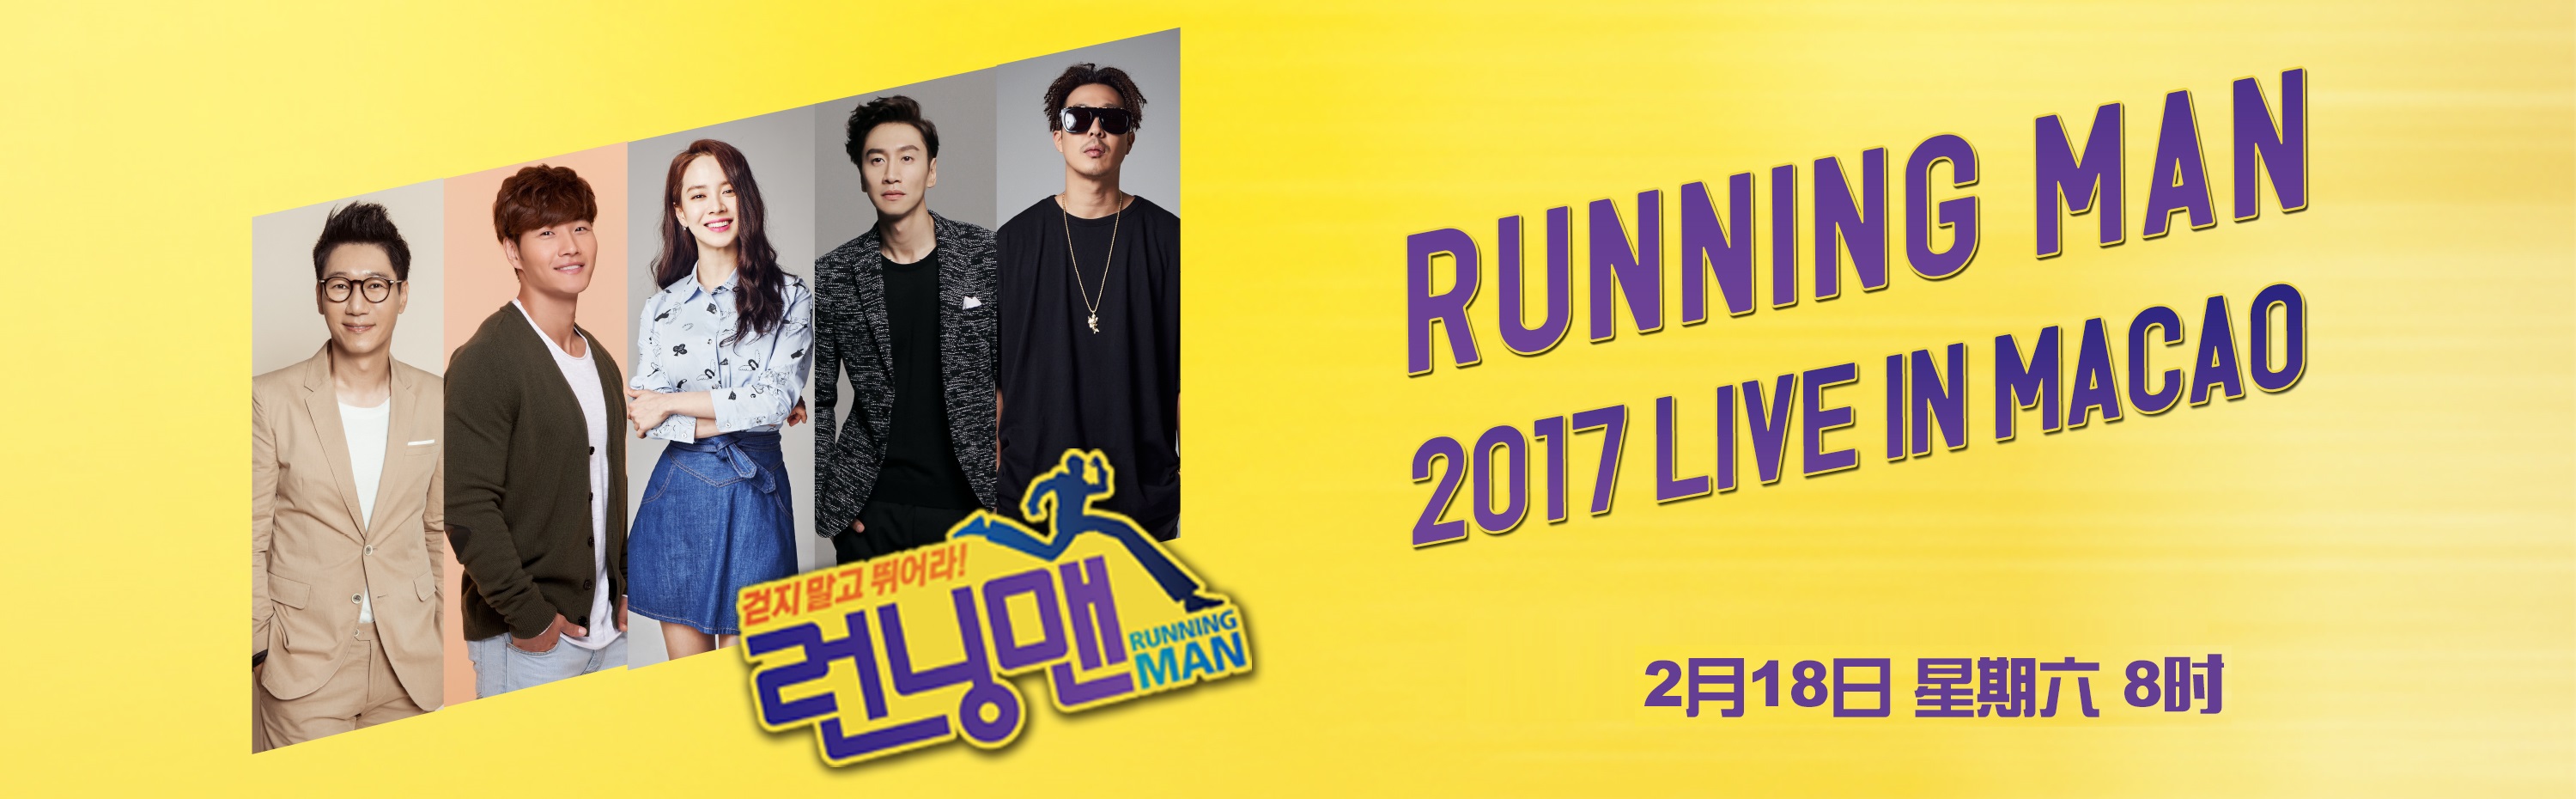 Running Man 2017 澳门演唱会